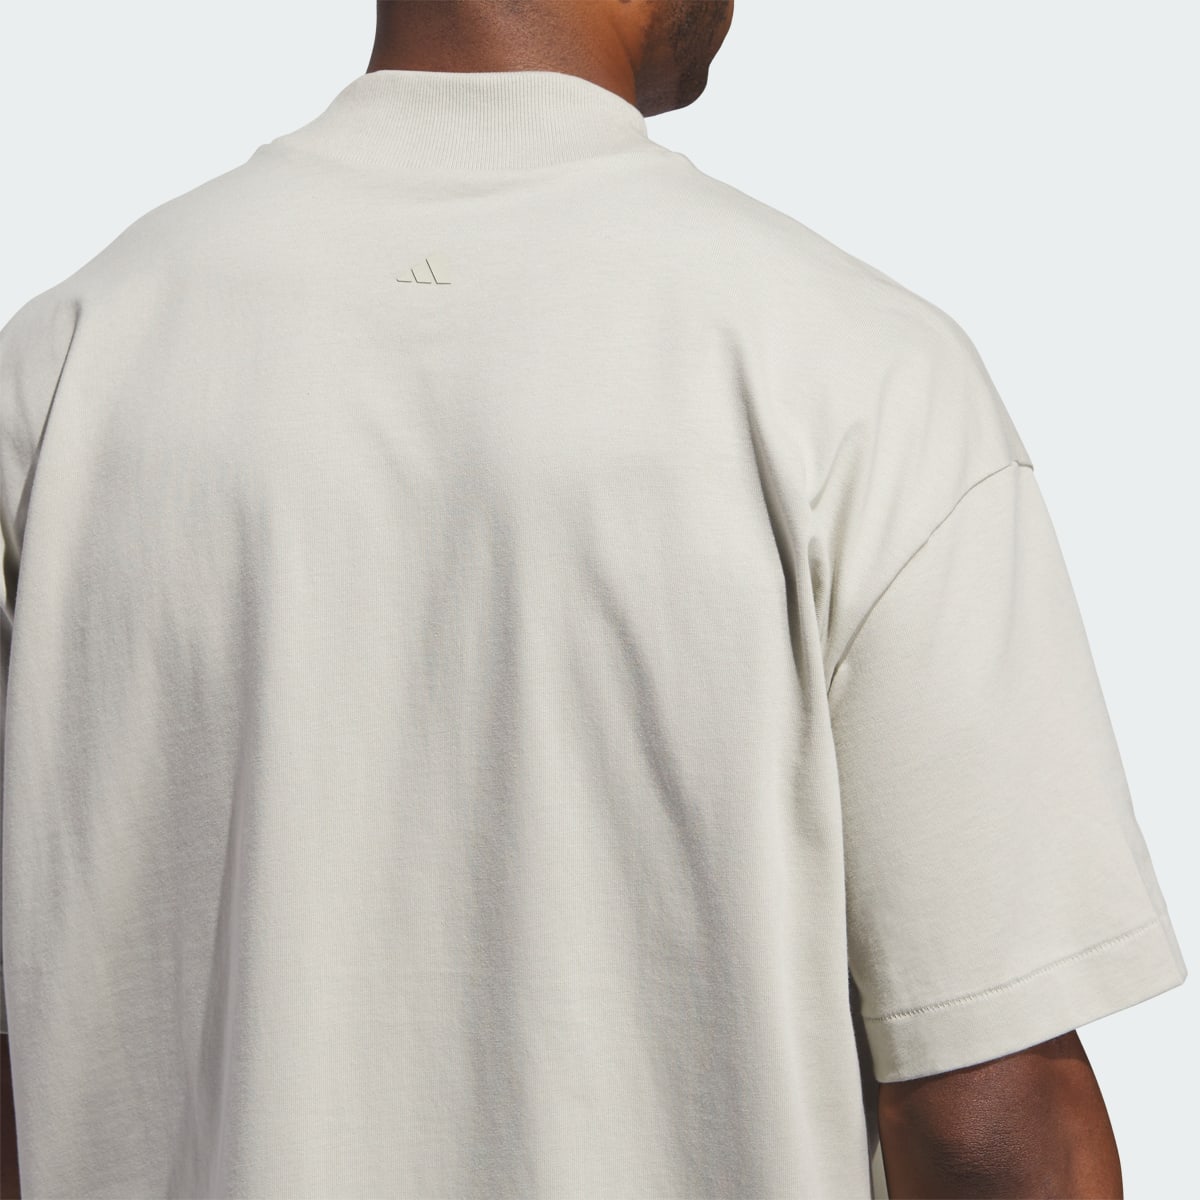 Adidas Basketball T-Shirt. 7